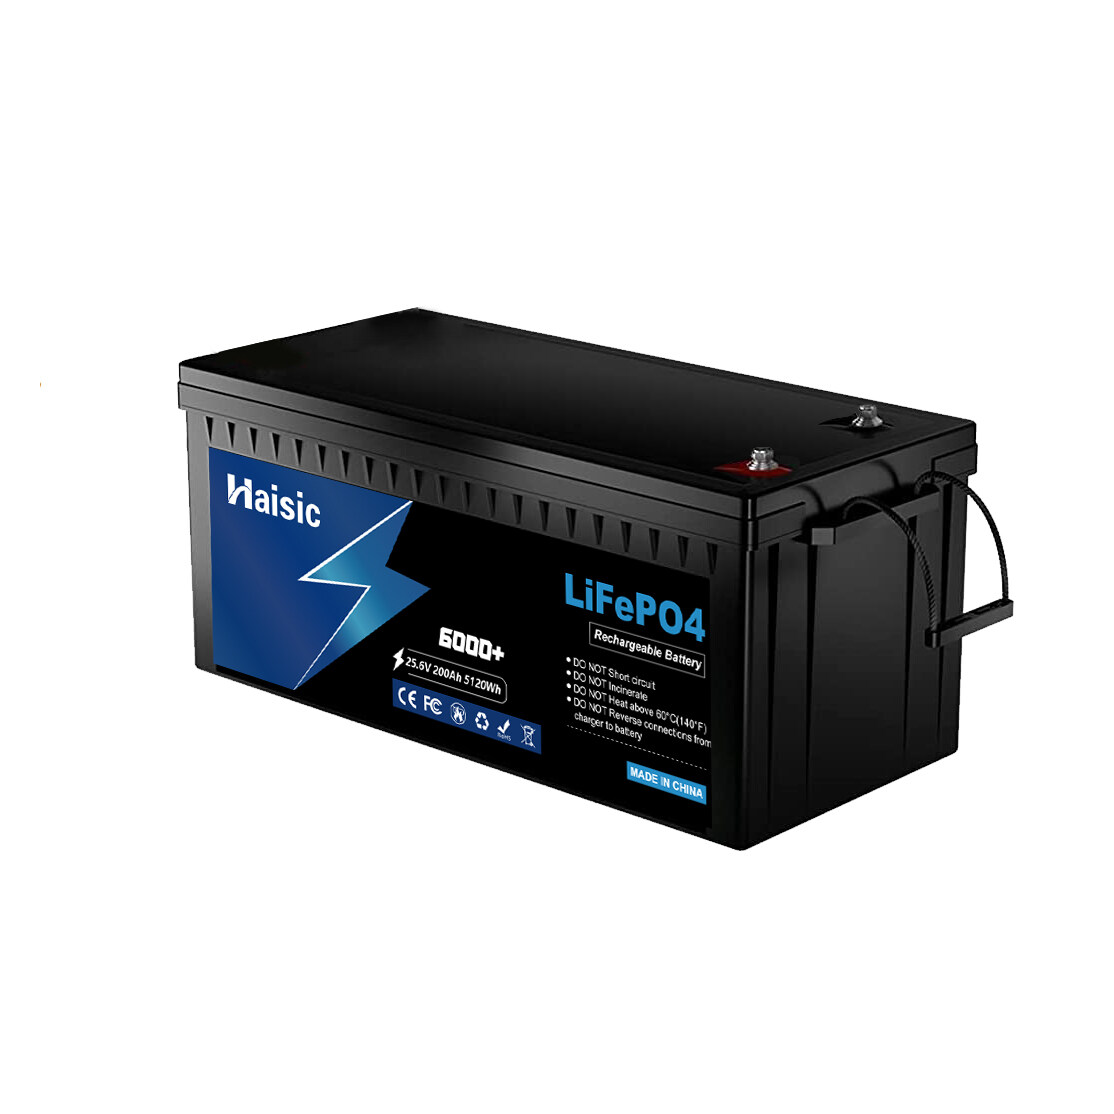 Why Choose a Customized China Lithium Iron LiFePO4 Battery?